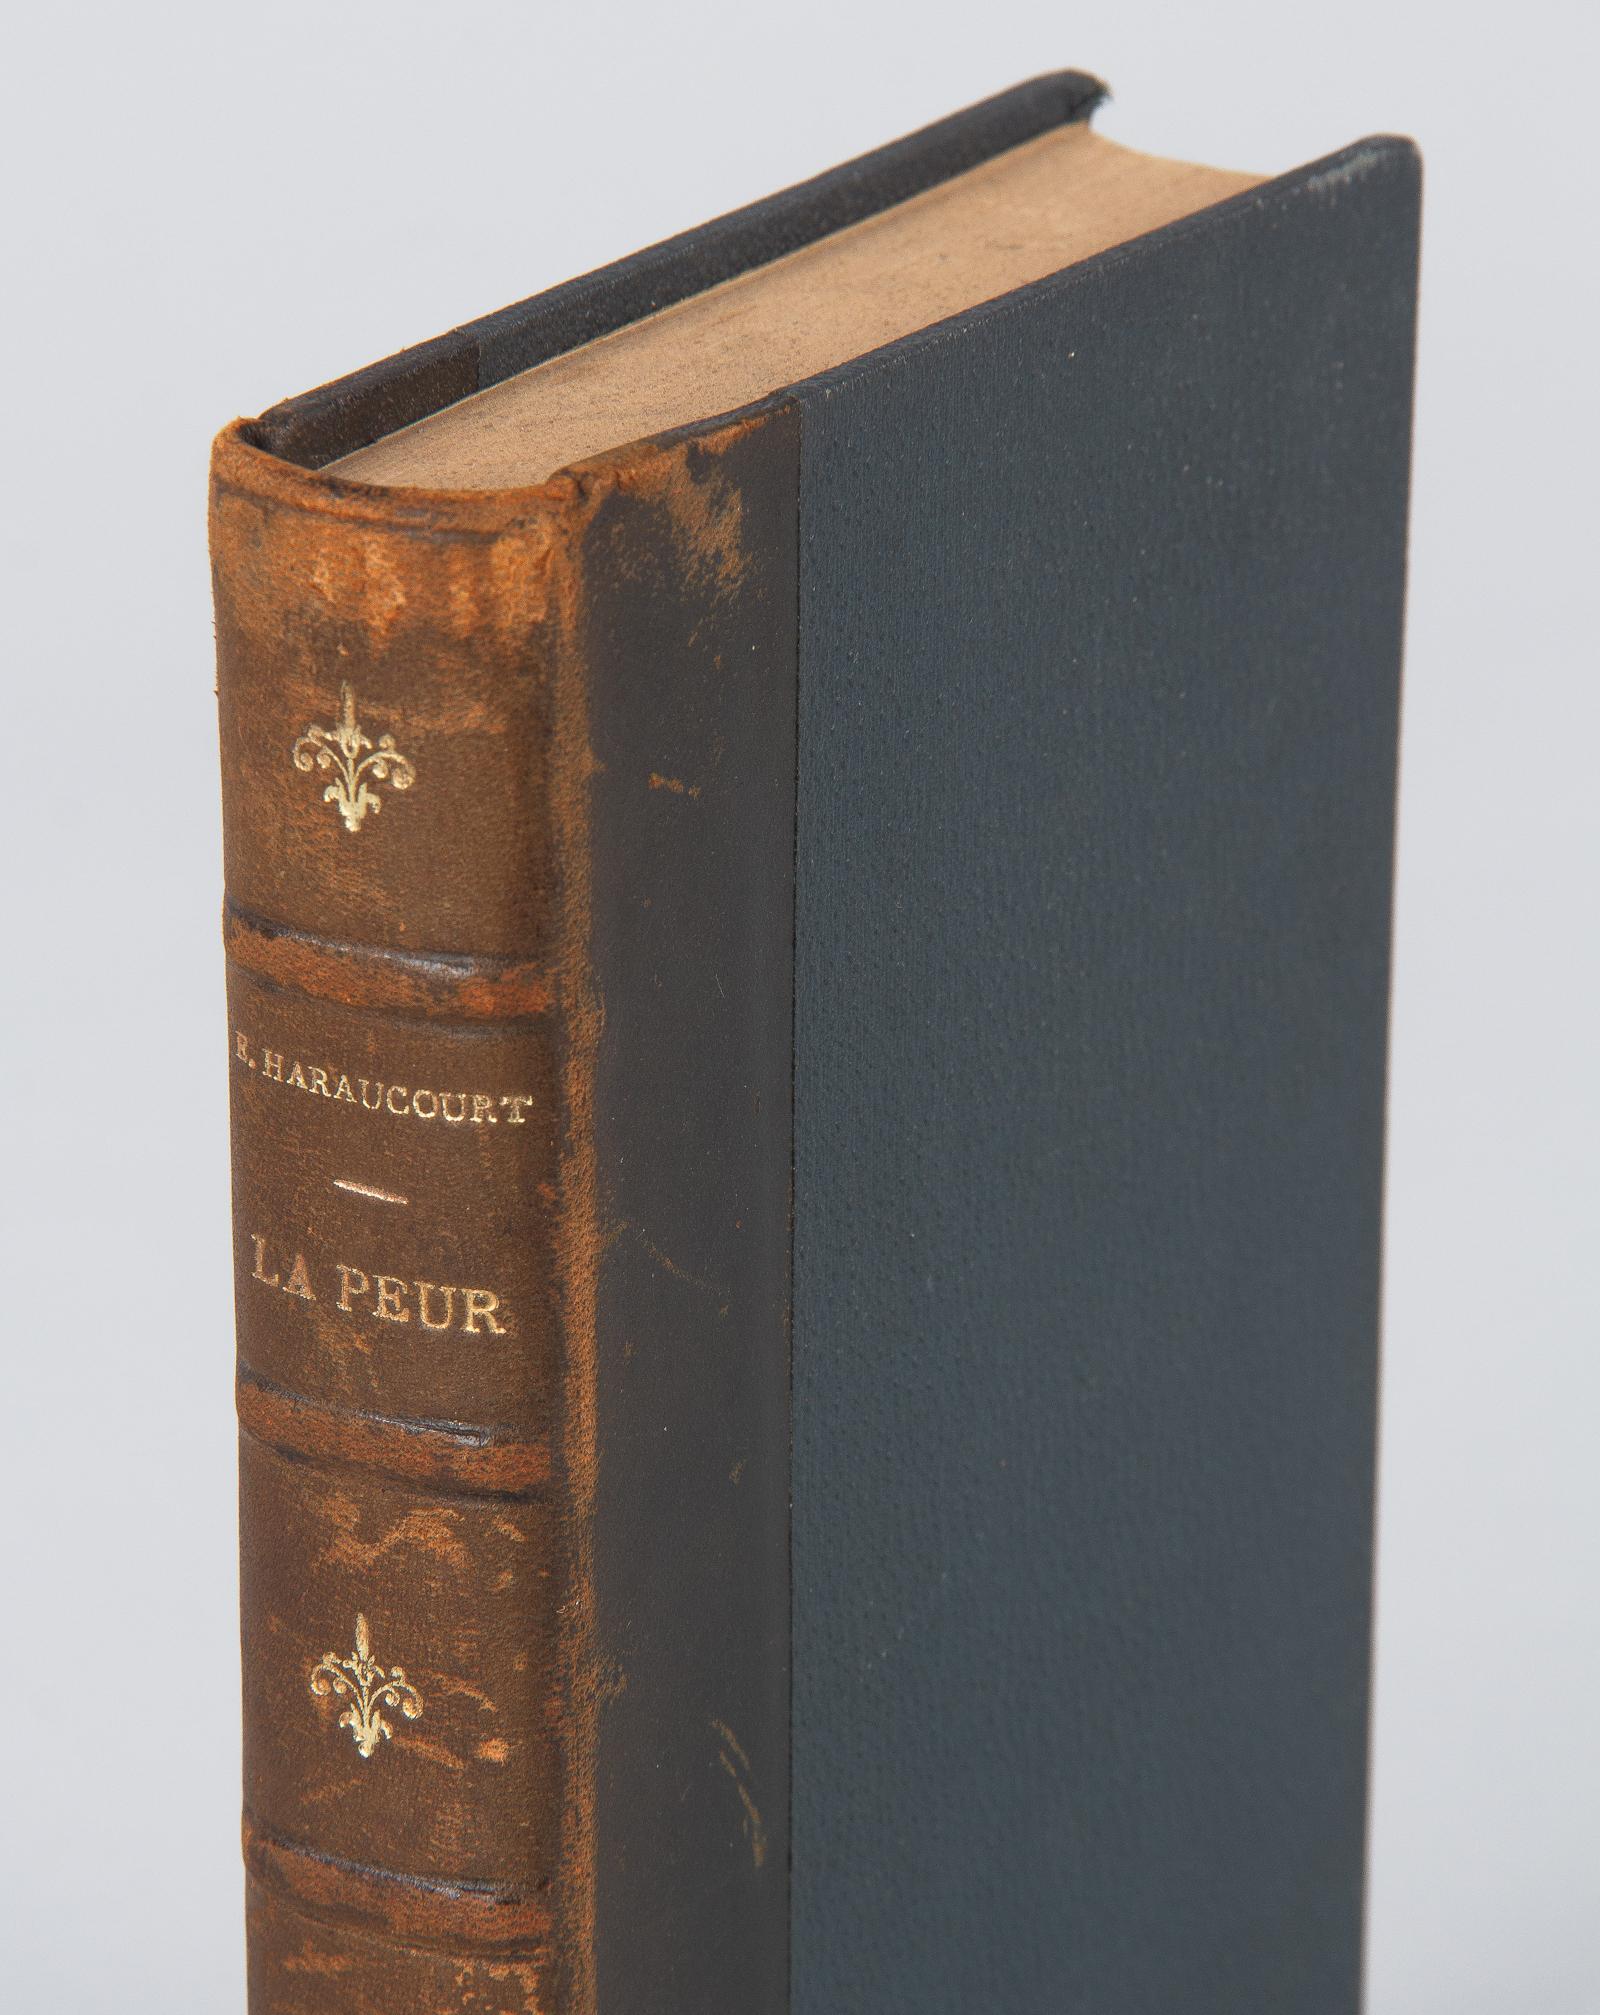 20th Century French Book, La Peur by Edmond Haraucourt, 1907